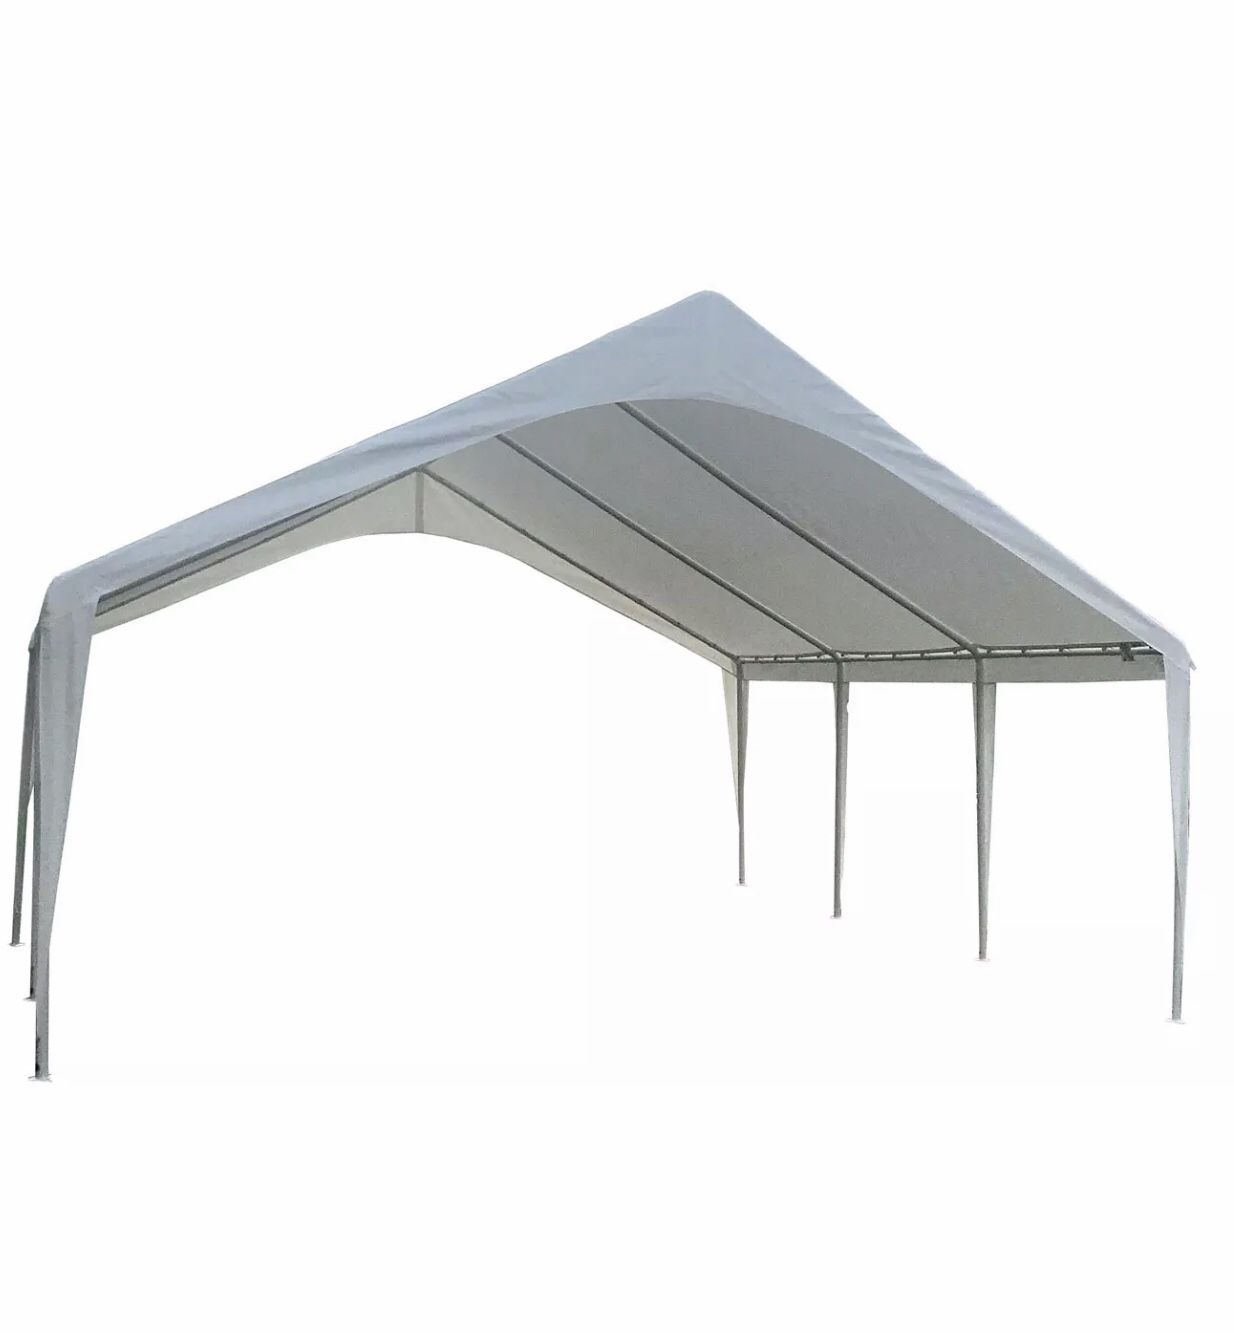 20x20 Ft Gazebo Canopy Rent Tent for weddings party bbq restaurants outdoor festivities